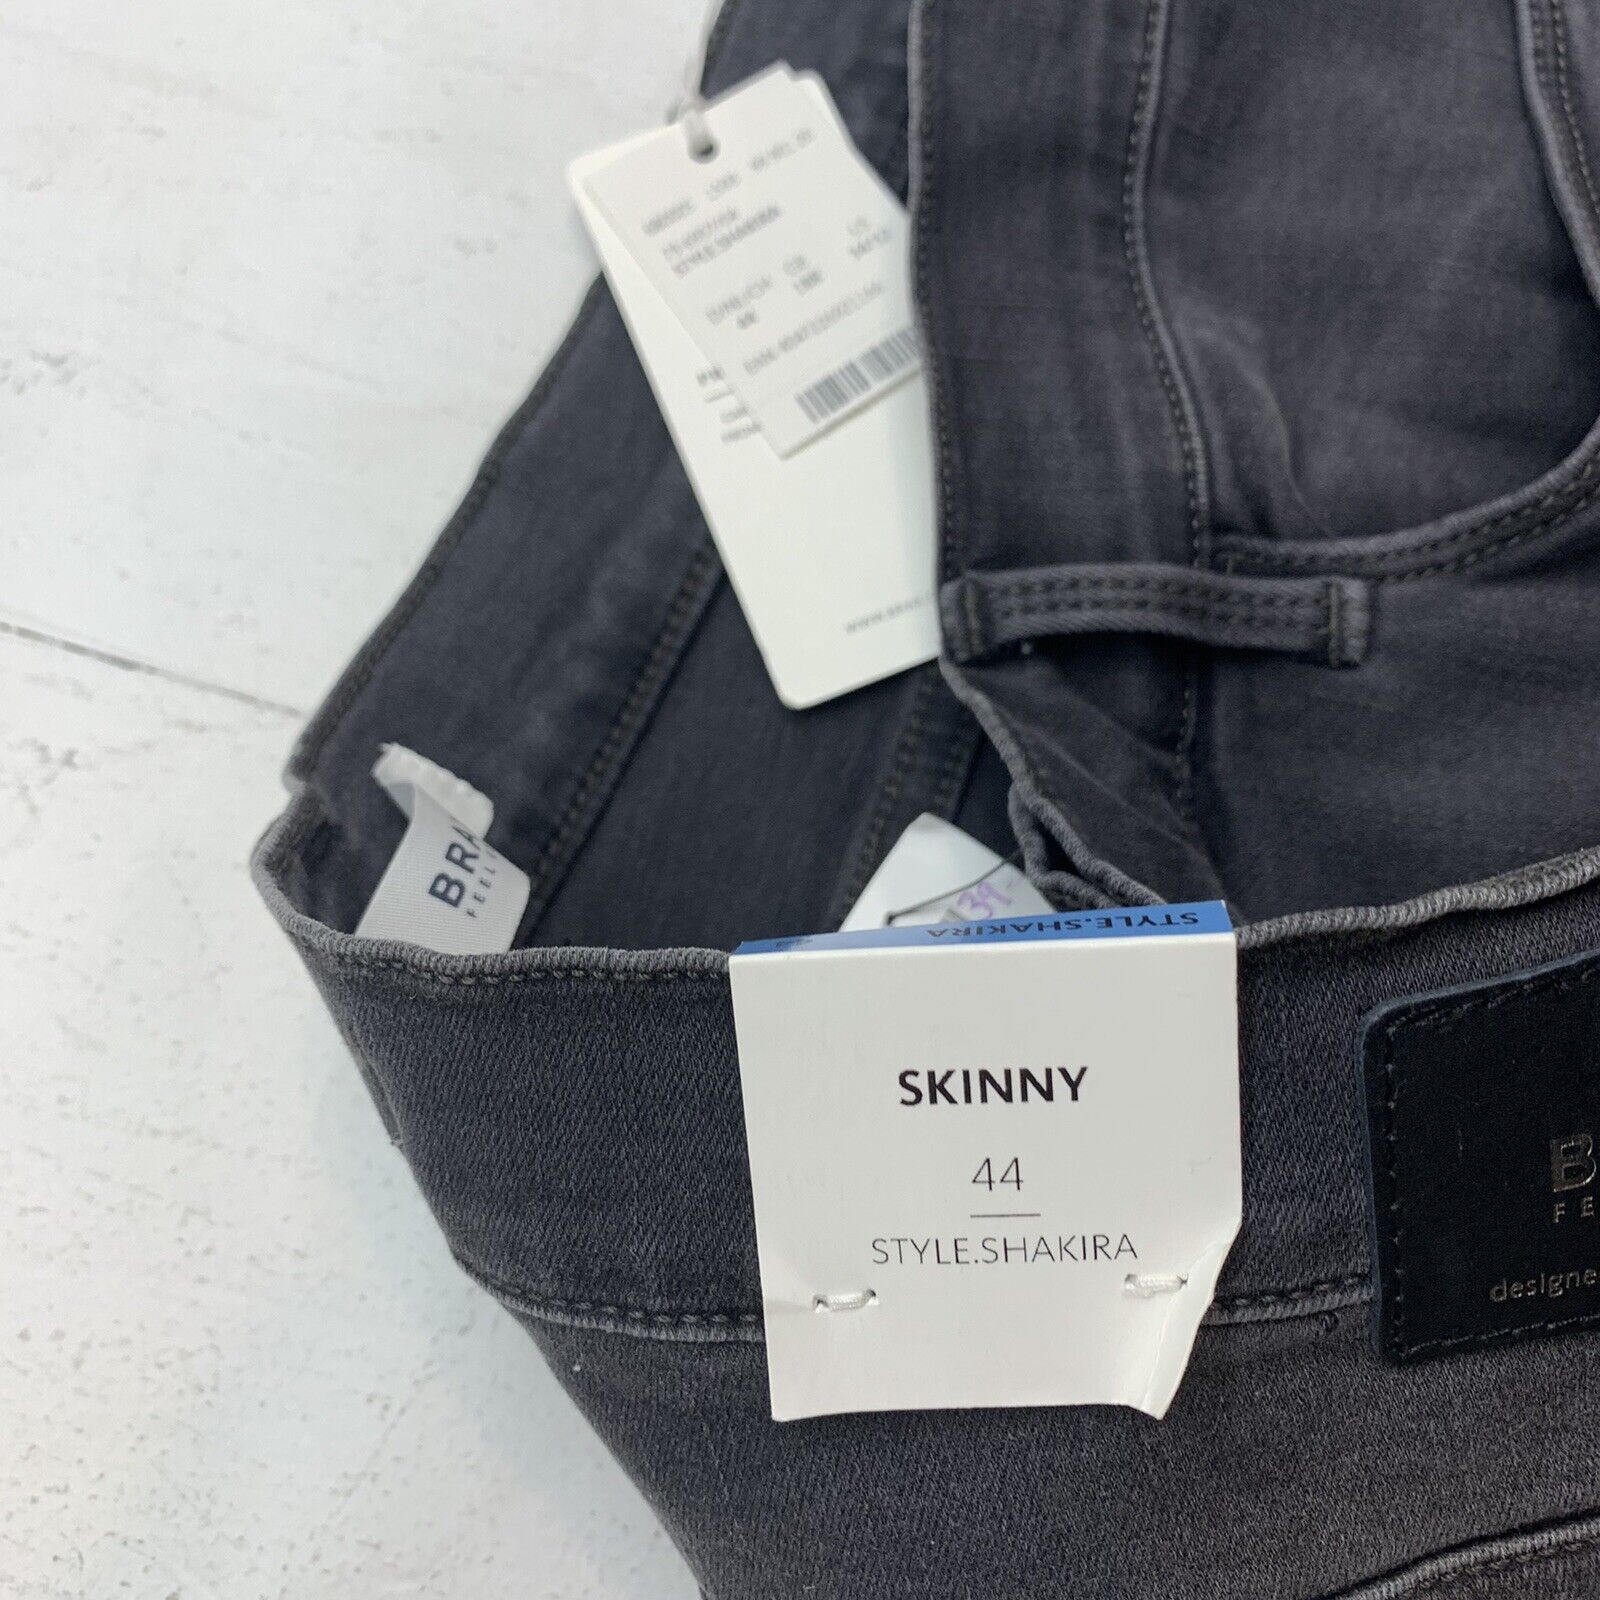 34/32 jeans - exchange Brax size beyond Skinny Shakira Womens